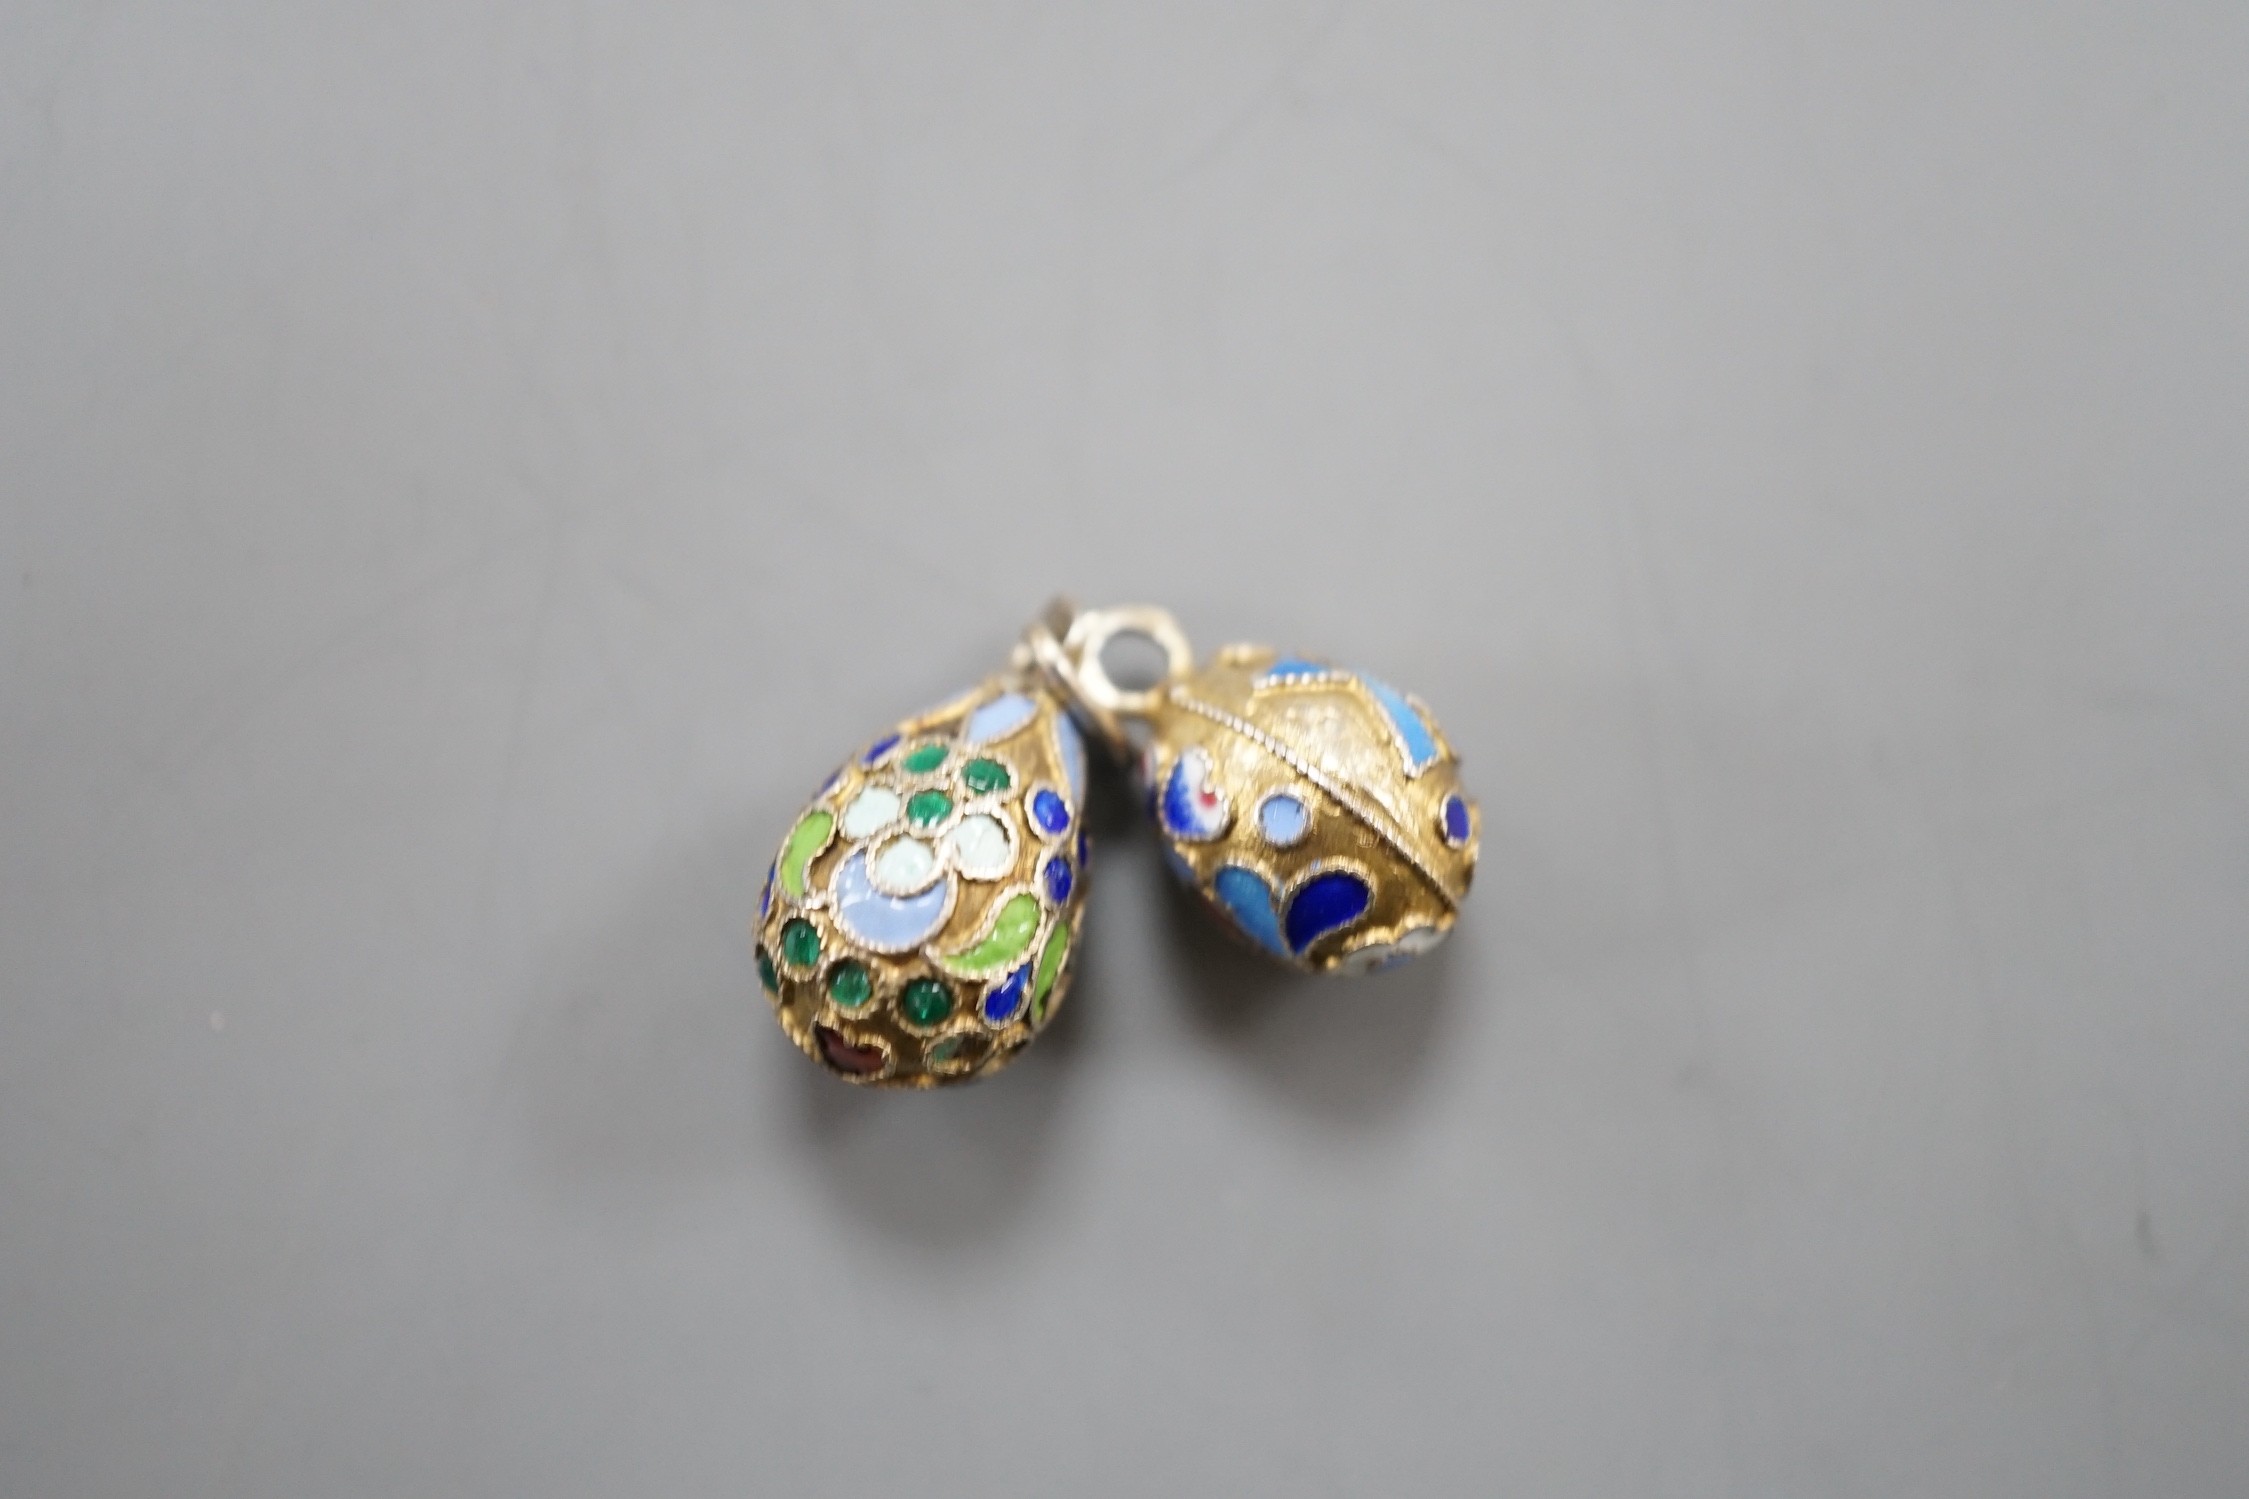 An early 20th century Russian 84 zolotnik and polychrome cloisonné enamel set egg pendant, maker's mark HT?, 17mm and a similar smaller egg pendant, maker's mark HM?.